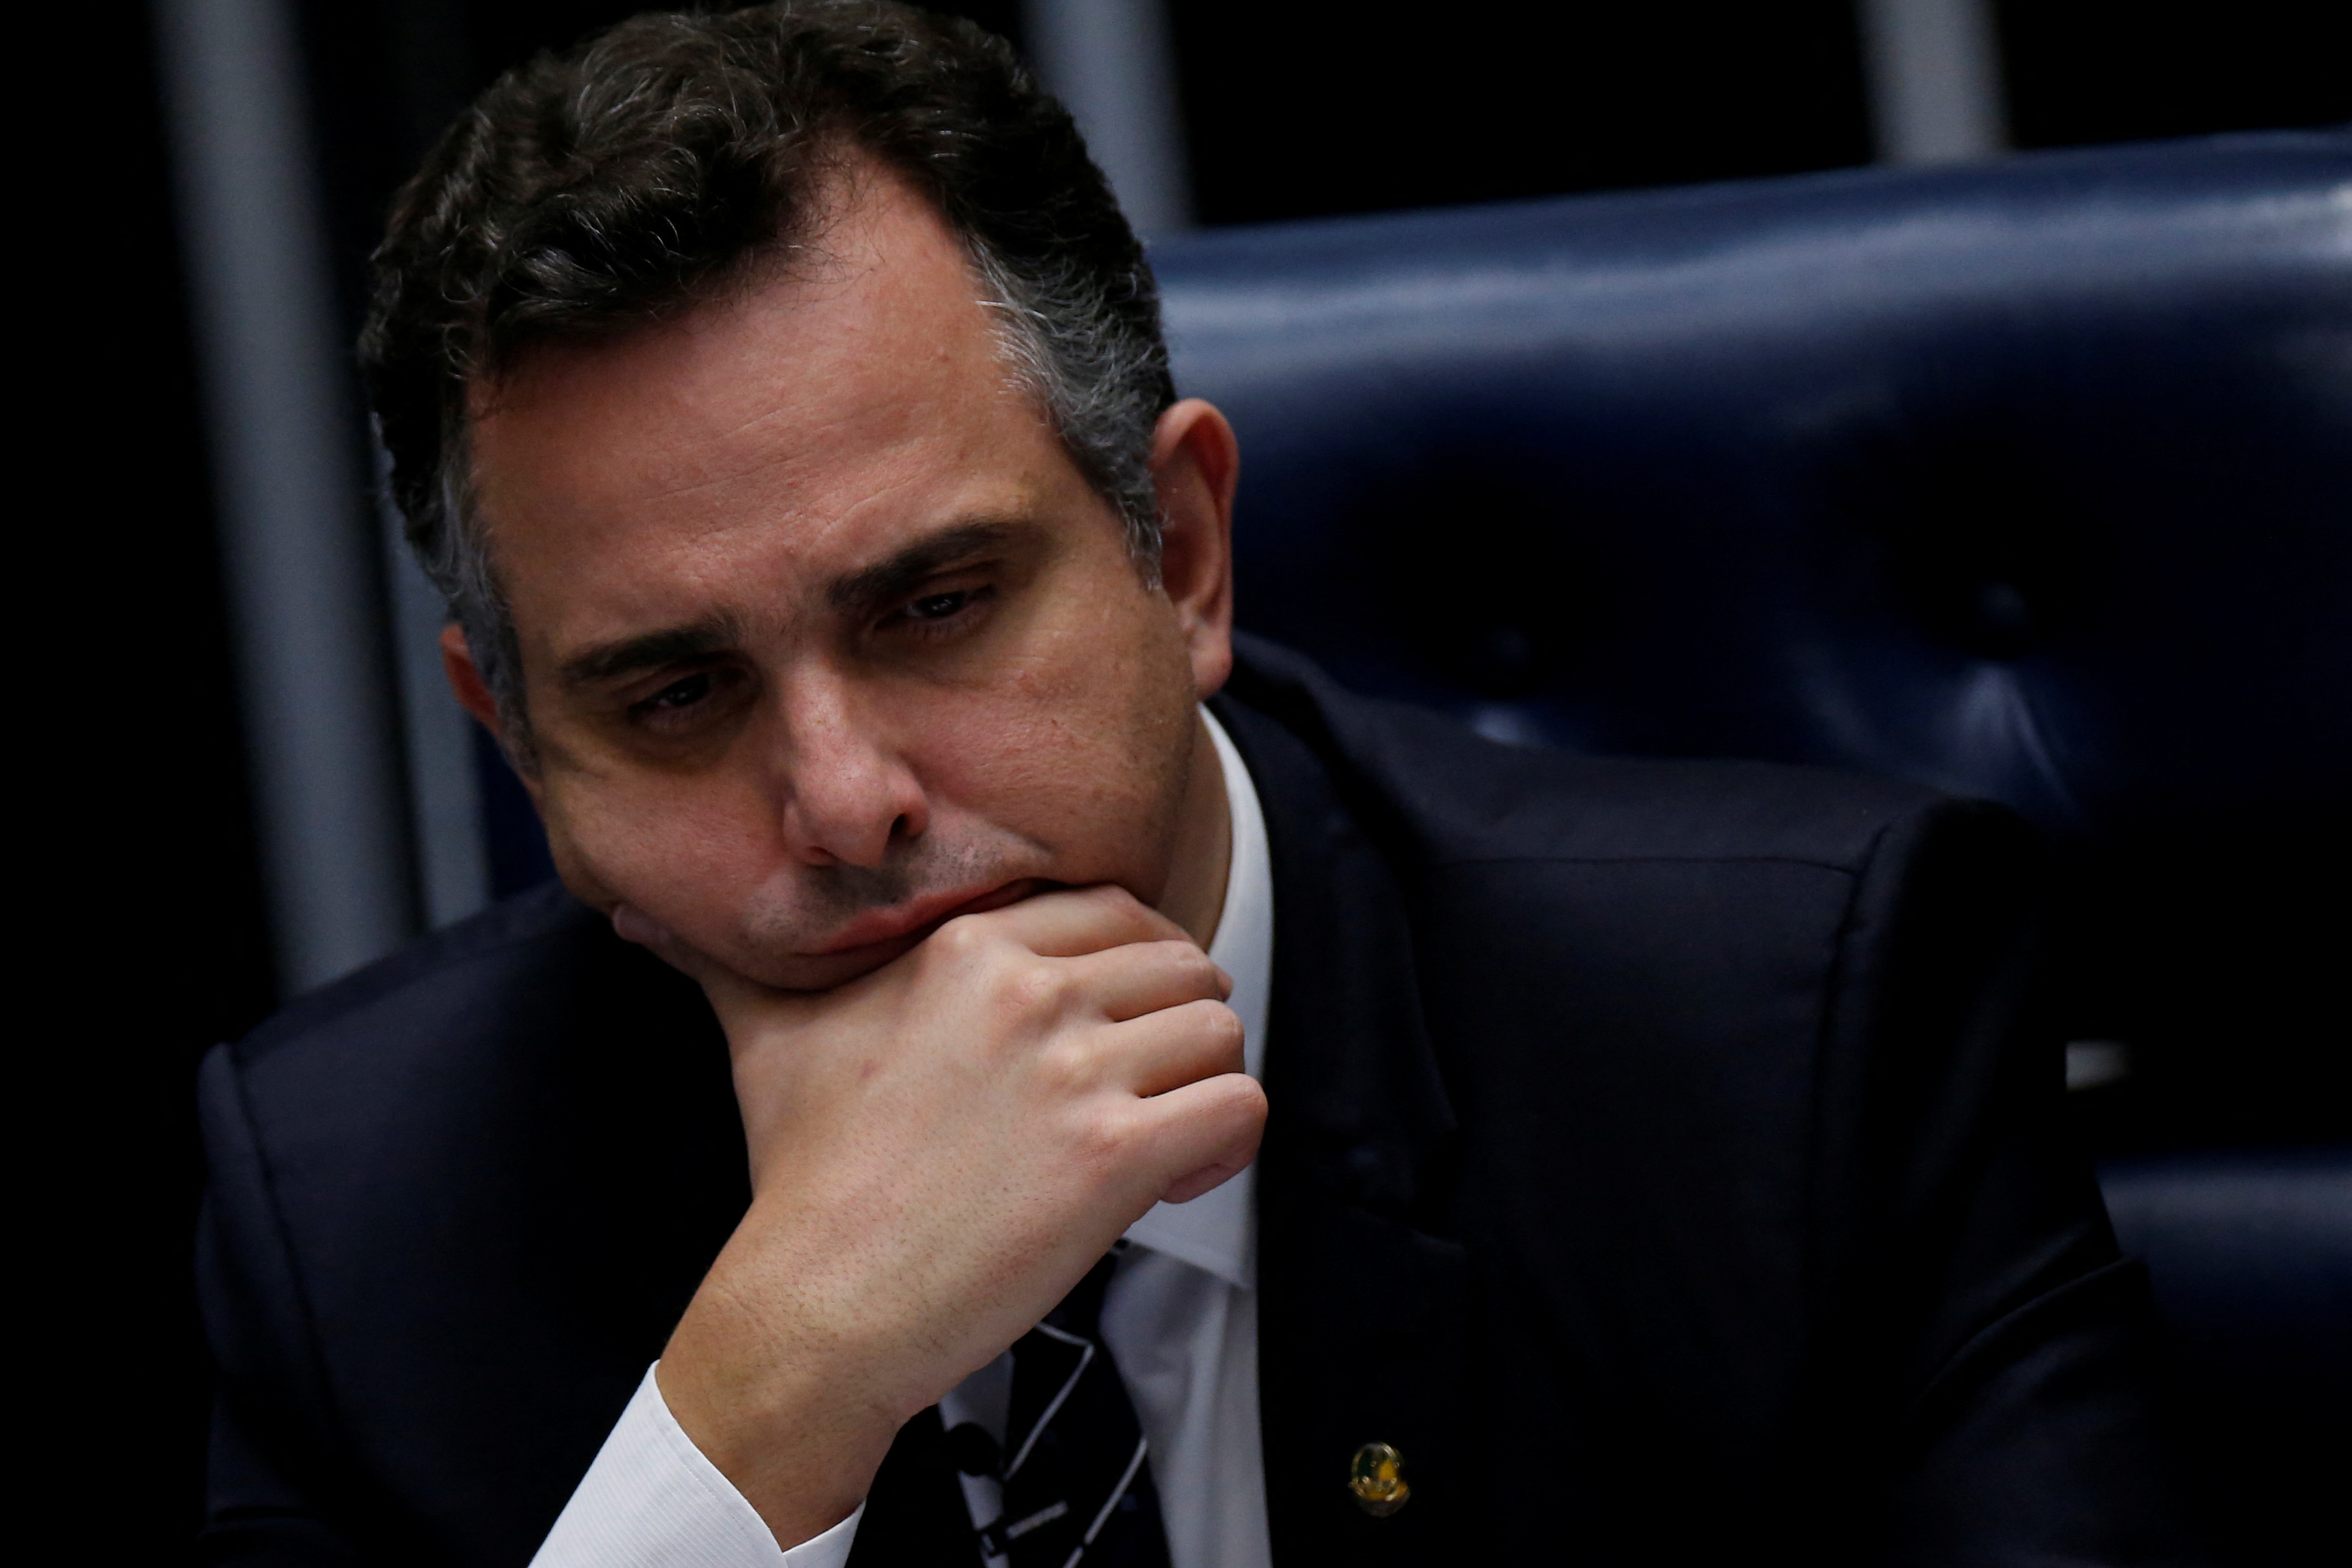 Brazil's Senate President Rodrigo Pacheco looks on during a session of the Federal Senate